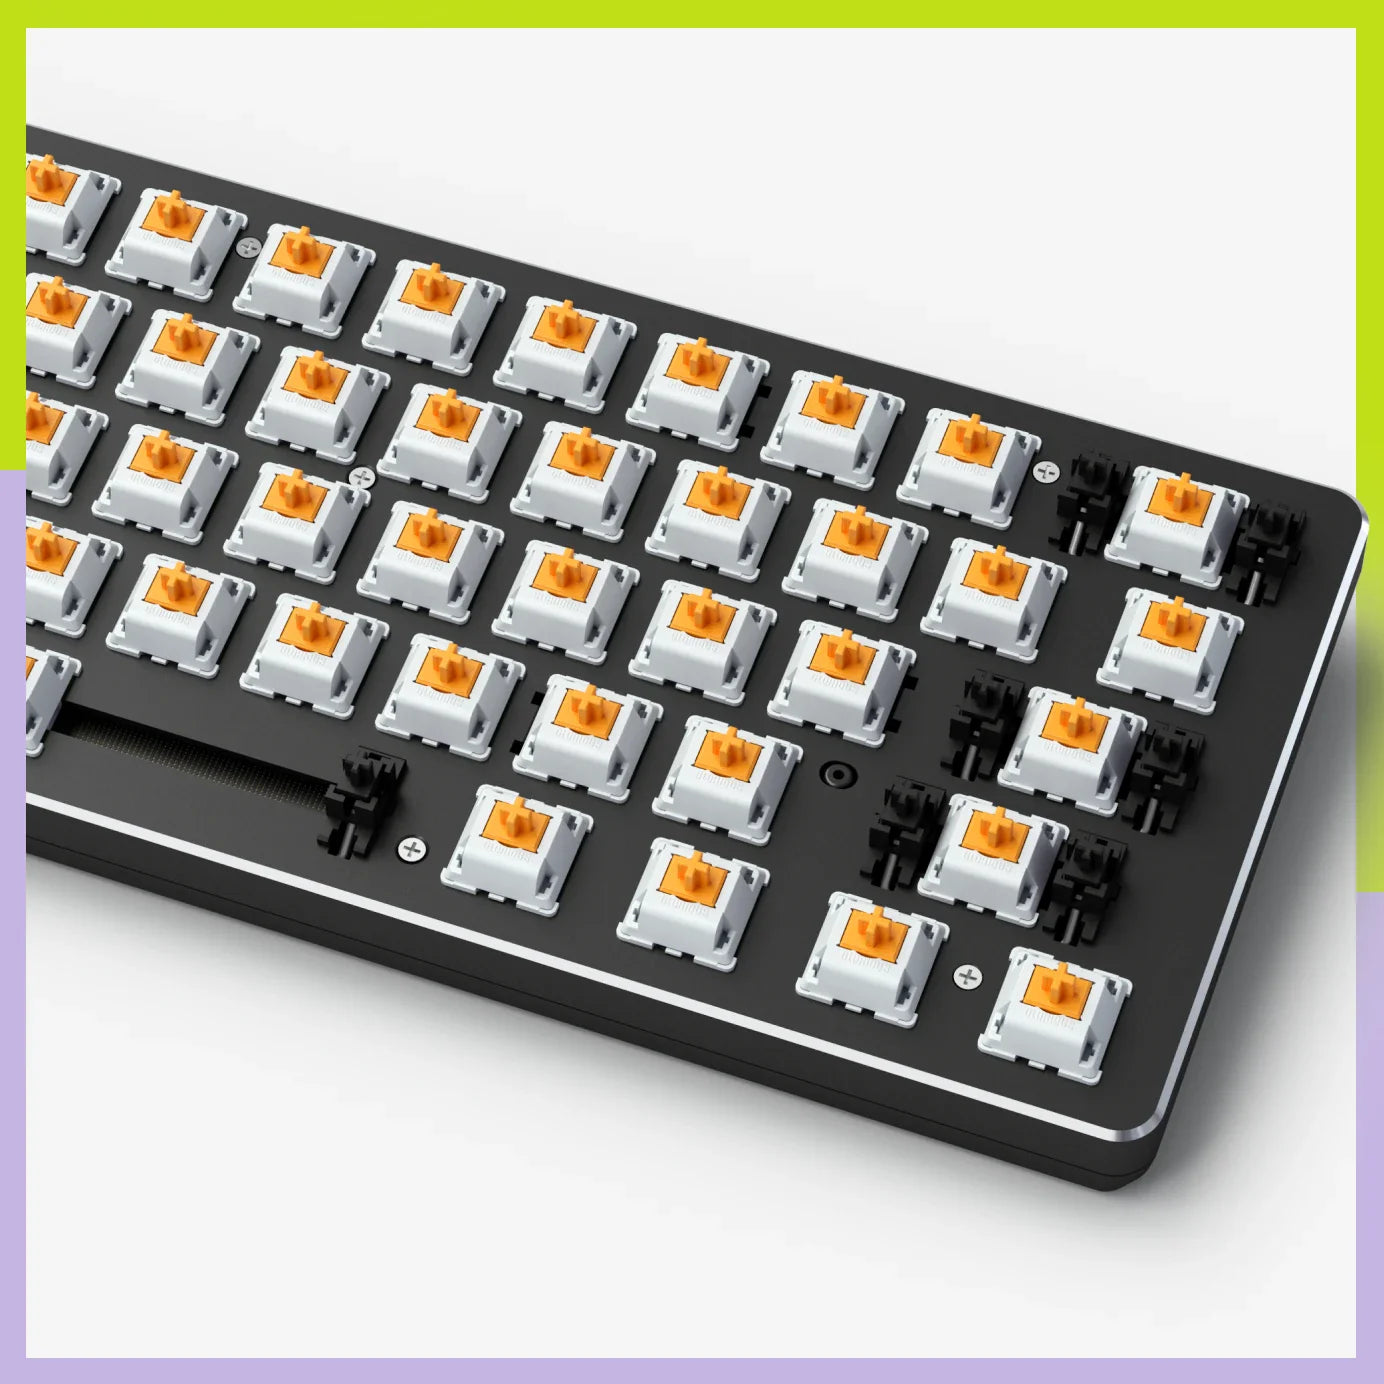 GMMK 2 Black keyboard with Panda switches